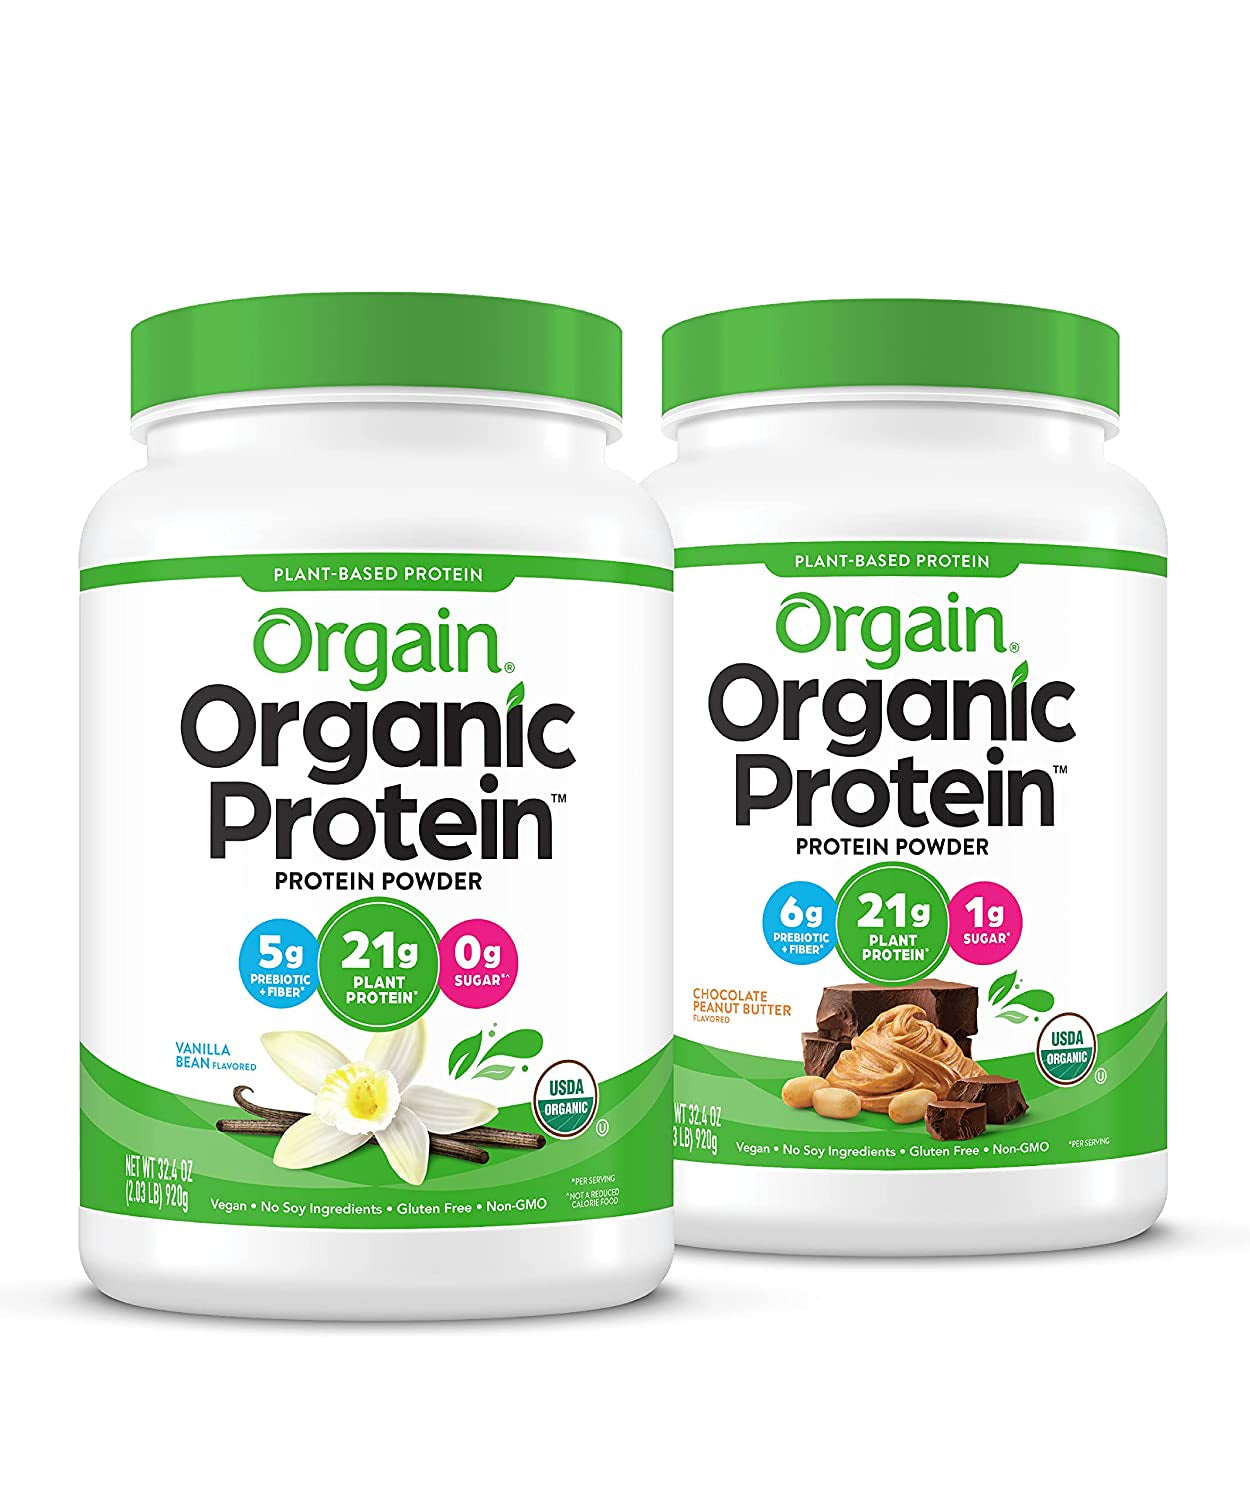 Organic Vegan Protein Powder, Chocolate Peanut Butter (21G Protein) and Vanilla Bean (21G Protein) - Plant Based, Gluten Free, Non-Gmo - 4.06 Lbs Total